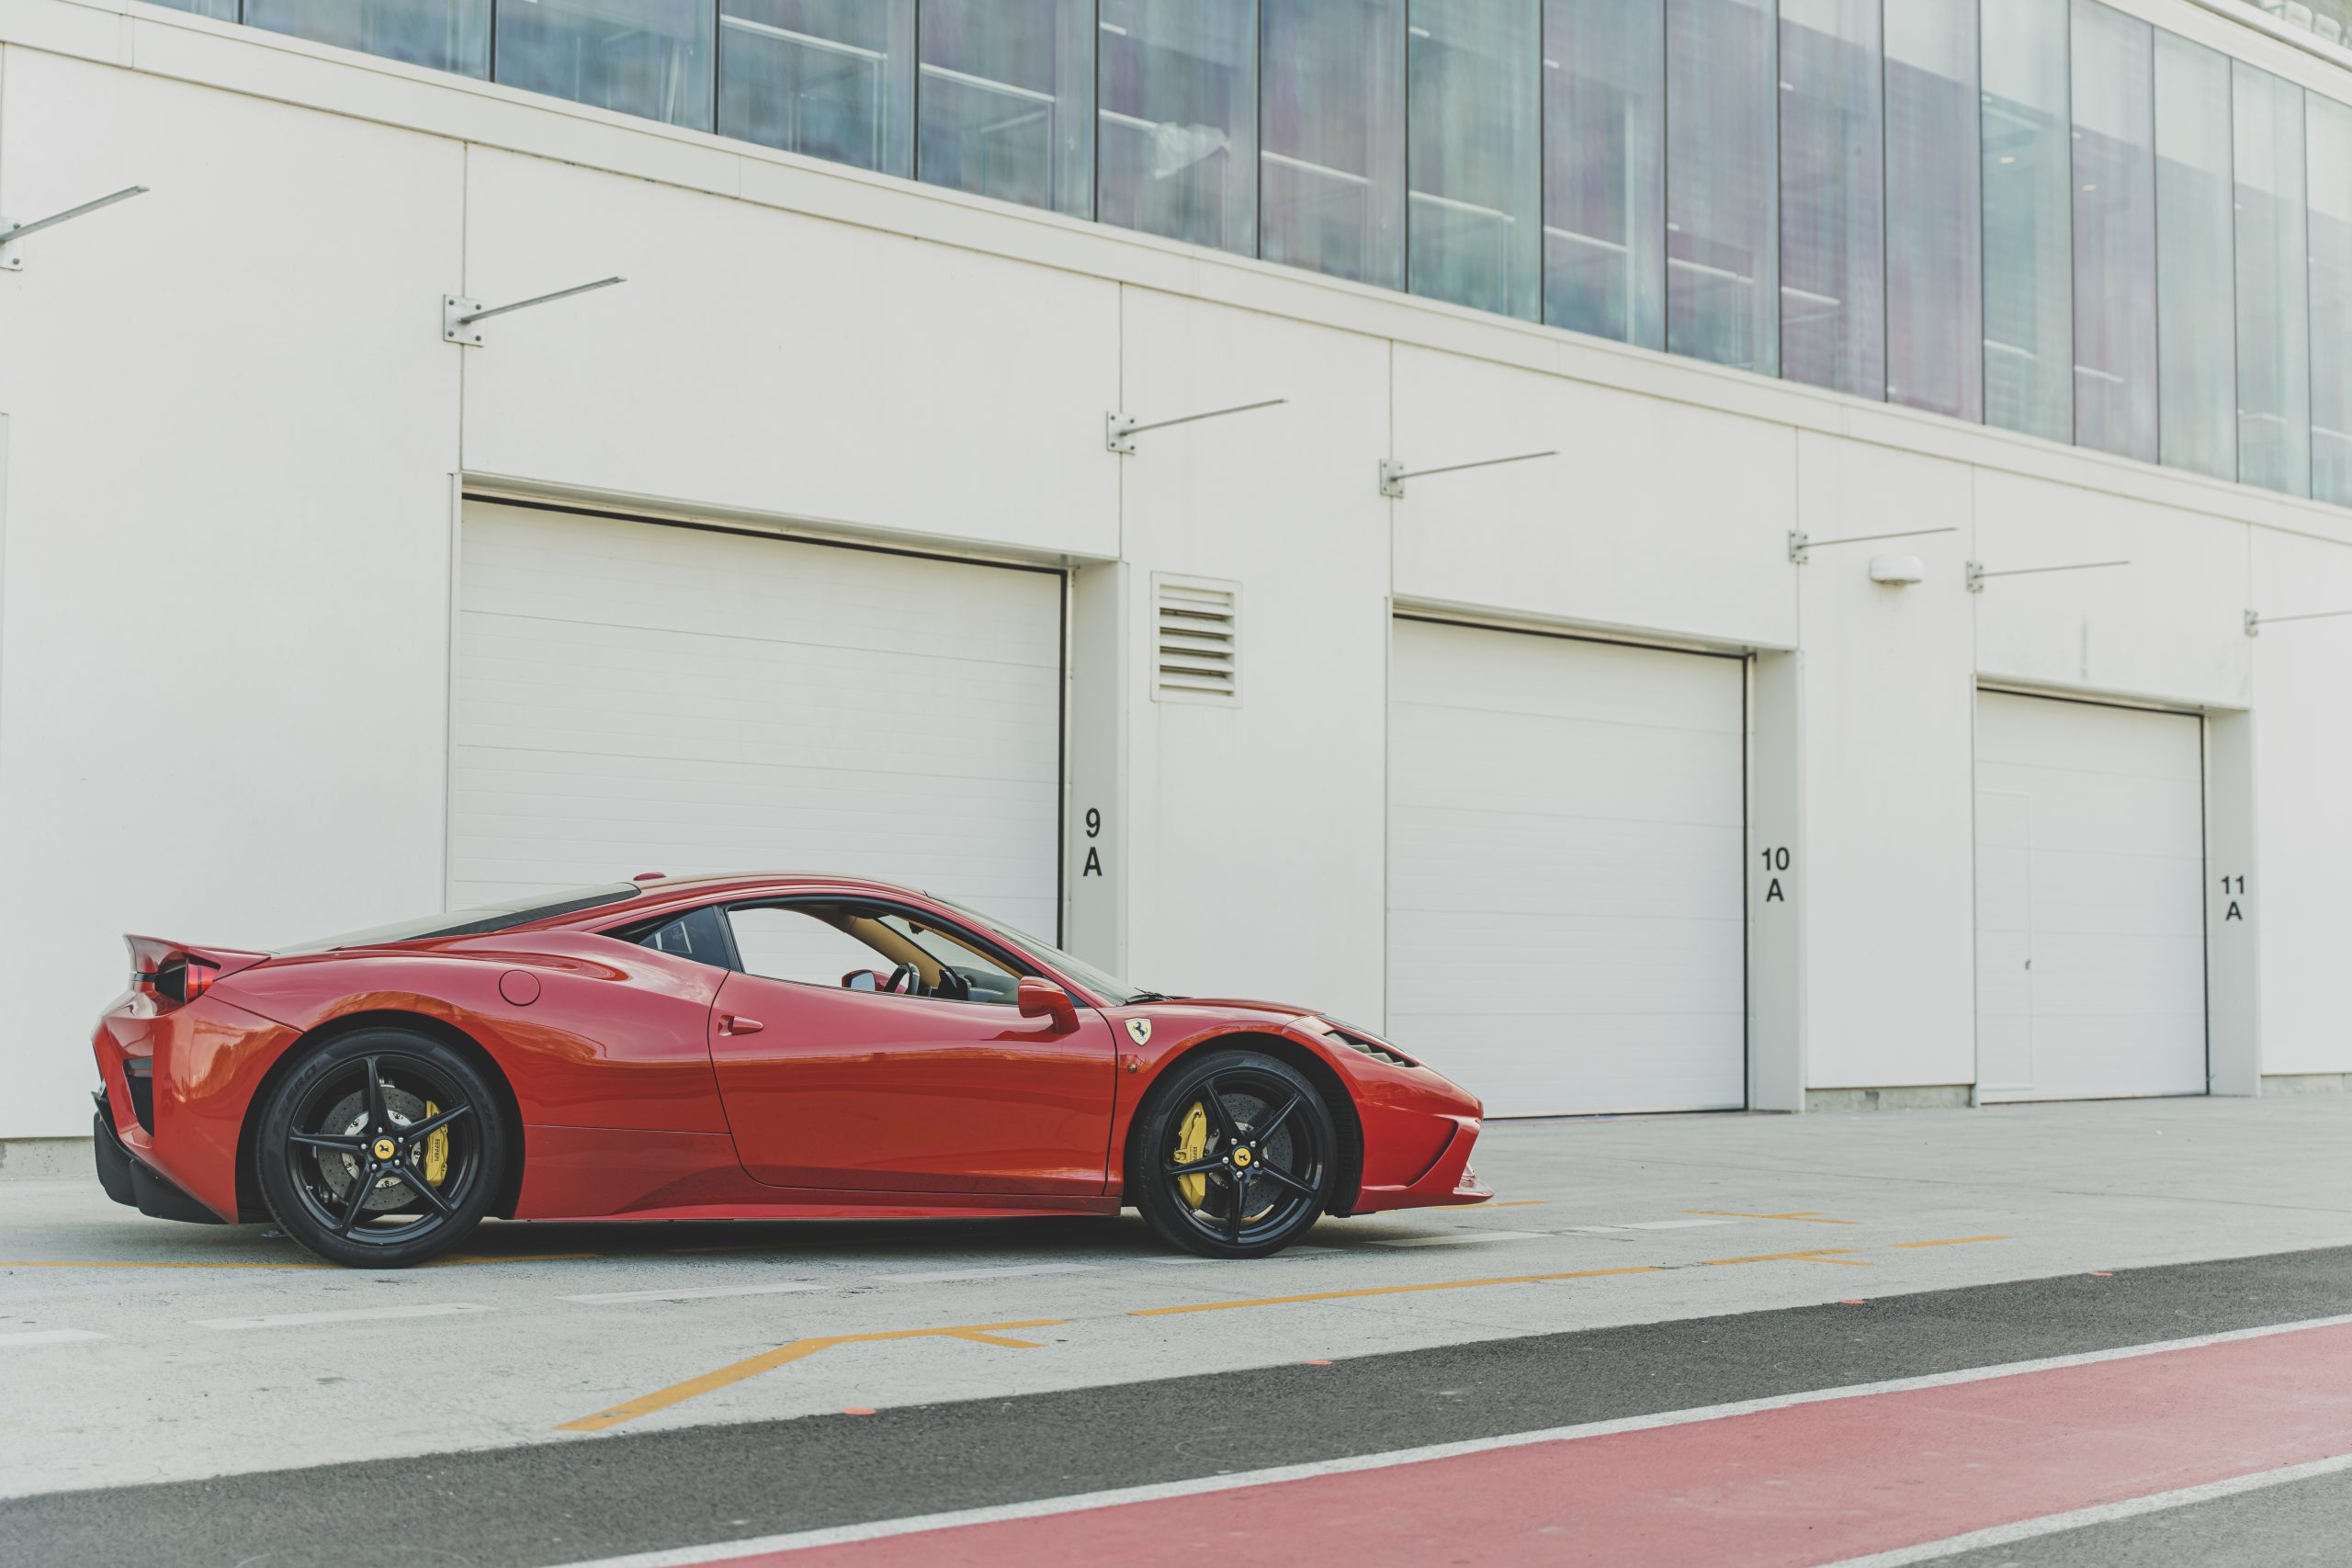 Rent a Ferrari Italia Red